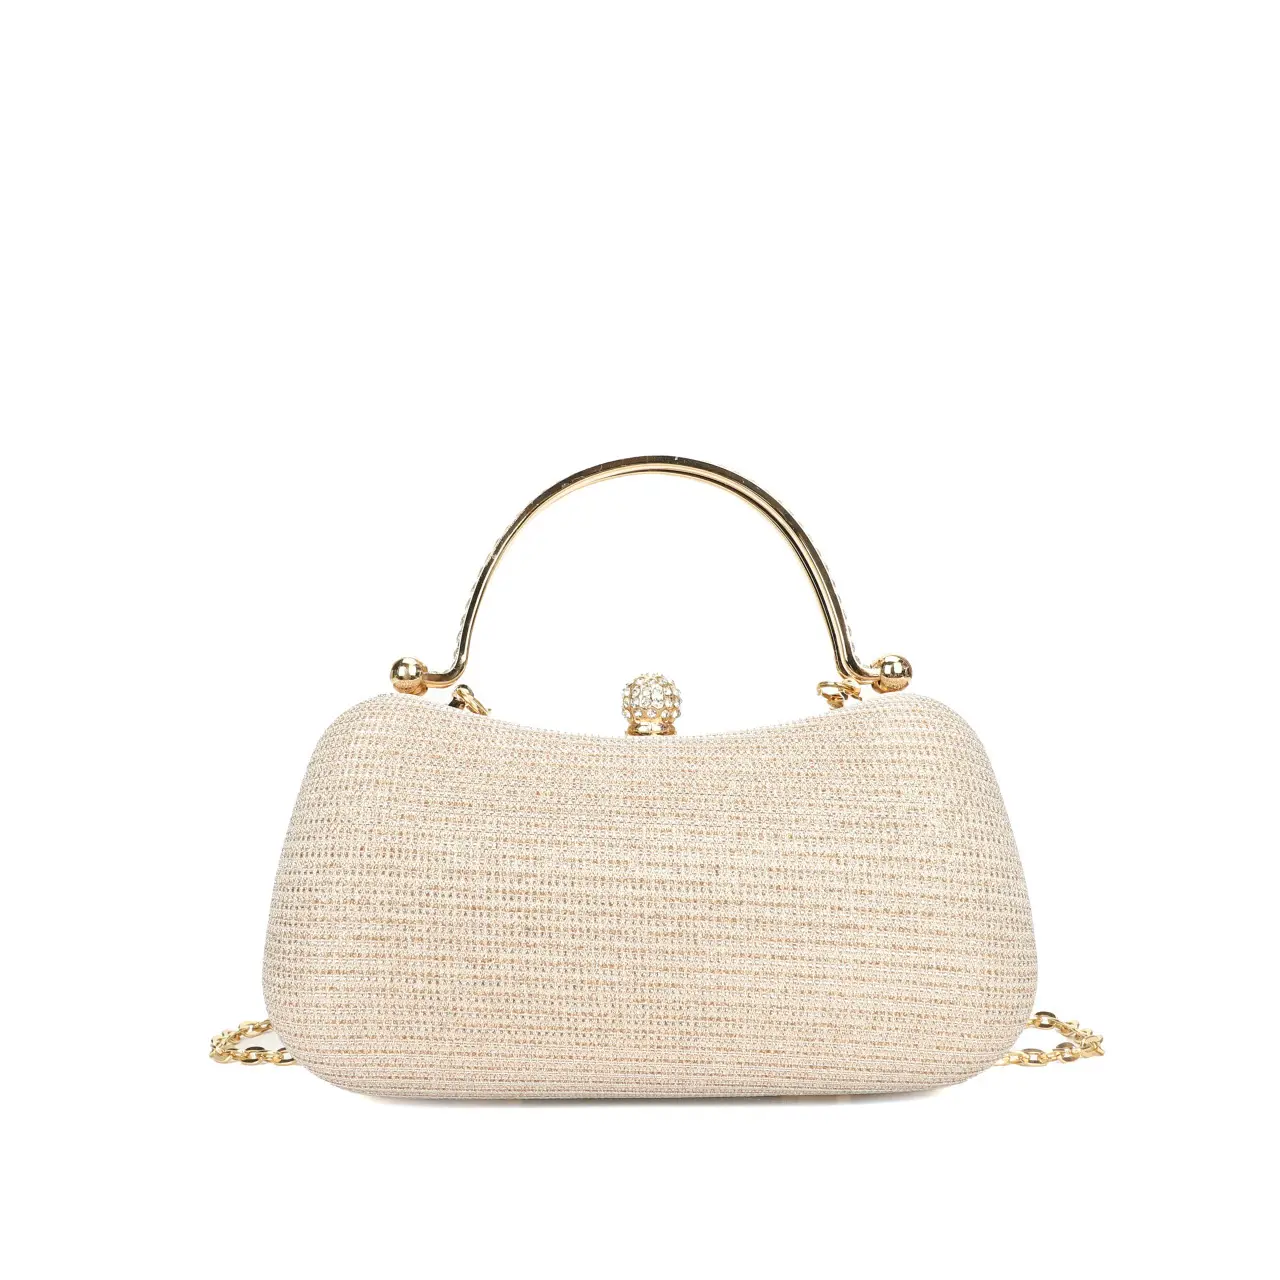 BESTELLA New Fashion Korean Handbags Gold Hot Designer Pvc Handle Clutch Small Jelly Wholesale Handbags Leather Bag For Women